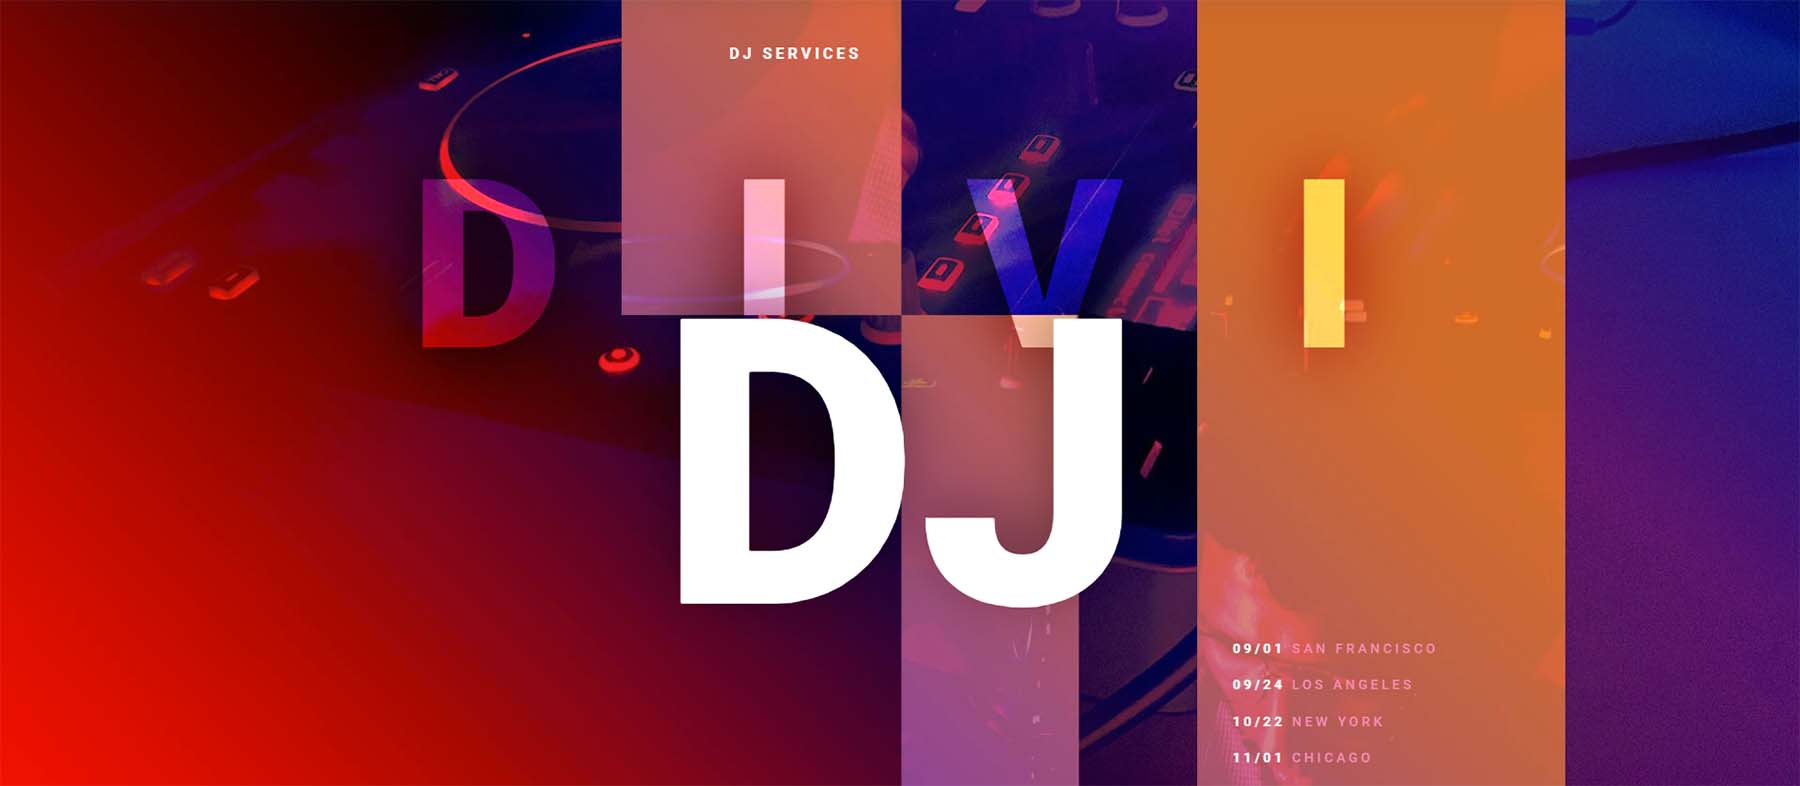 Divi and DJs WordPress theme